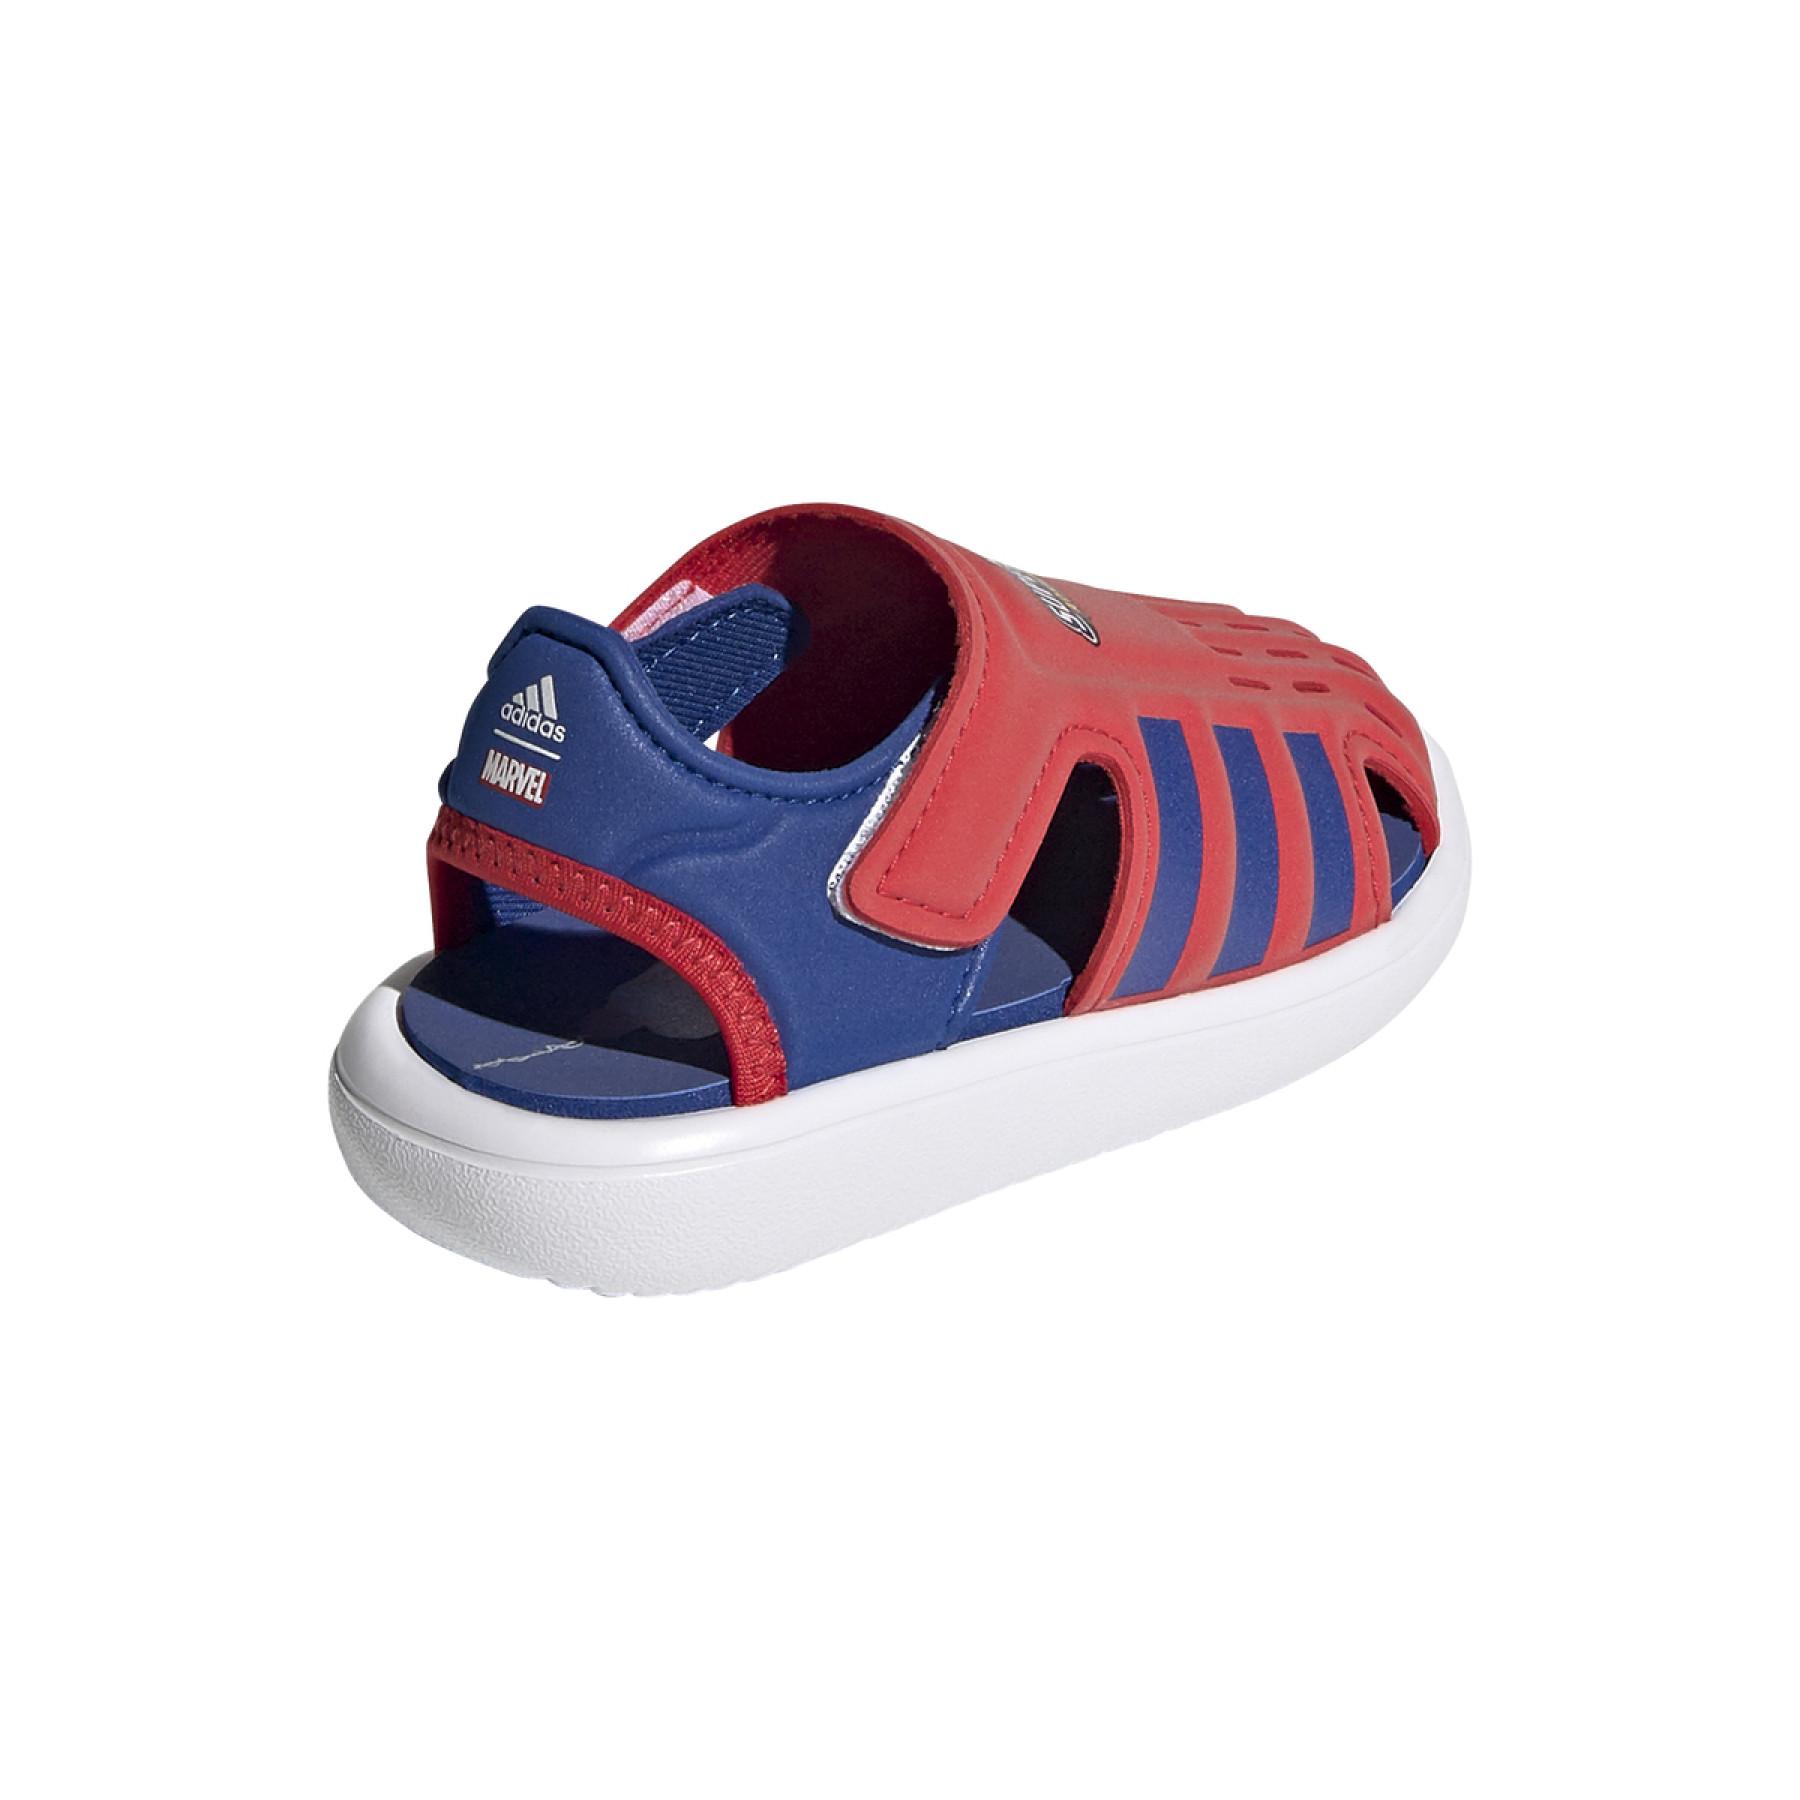 Children's flip-flops adidas Water I